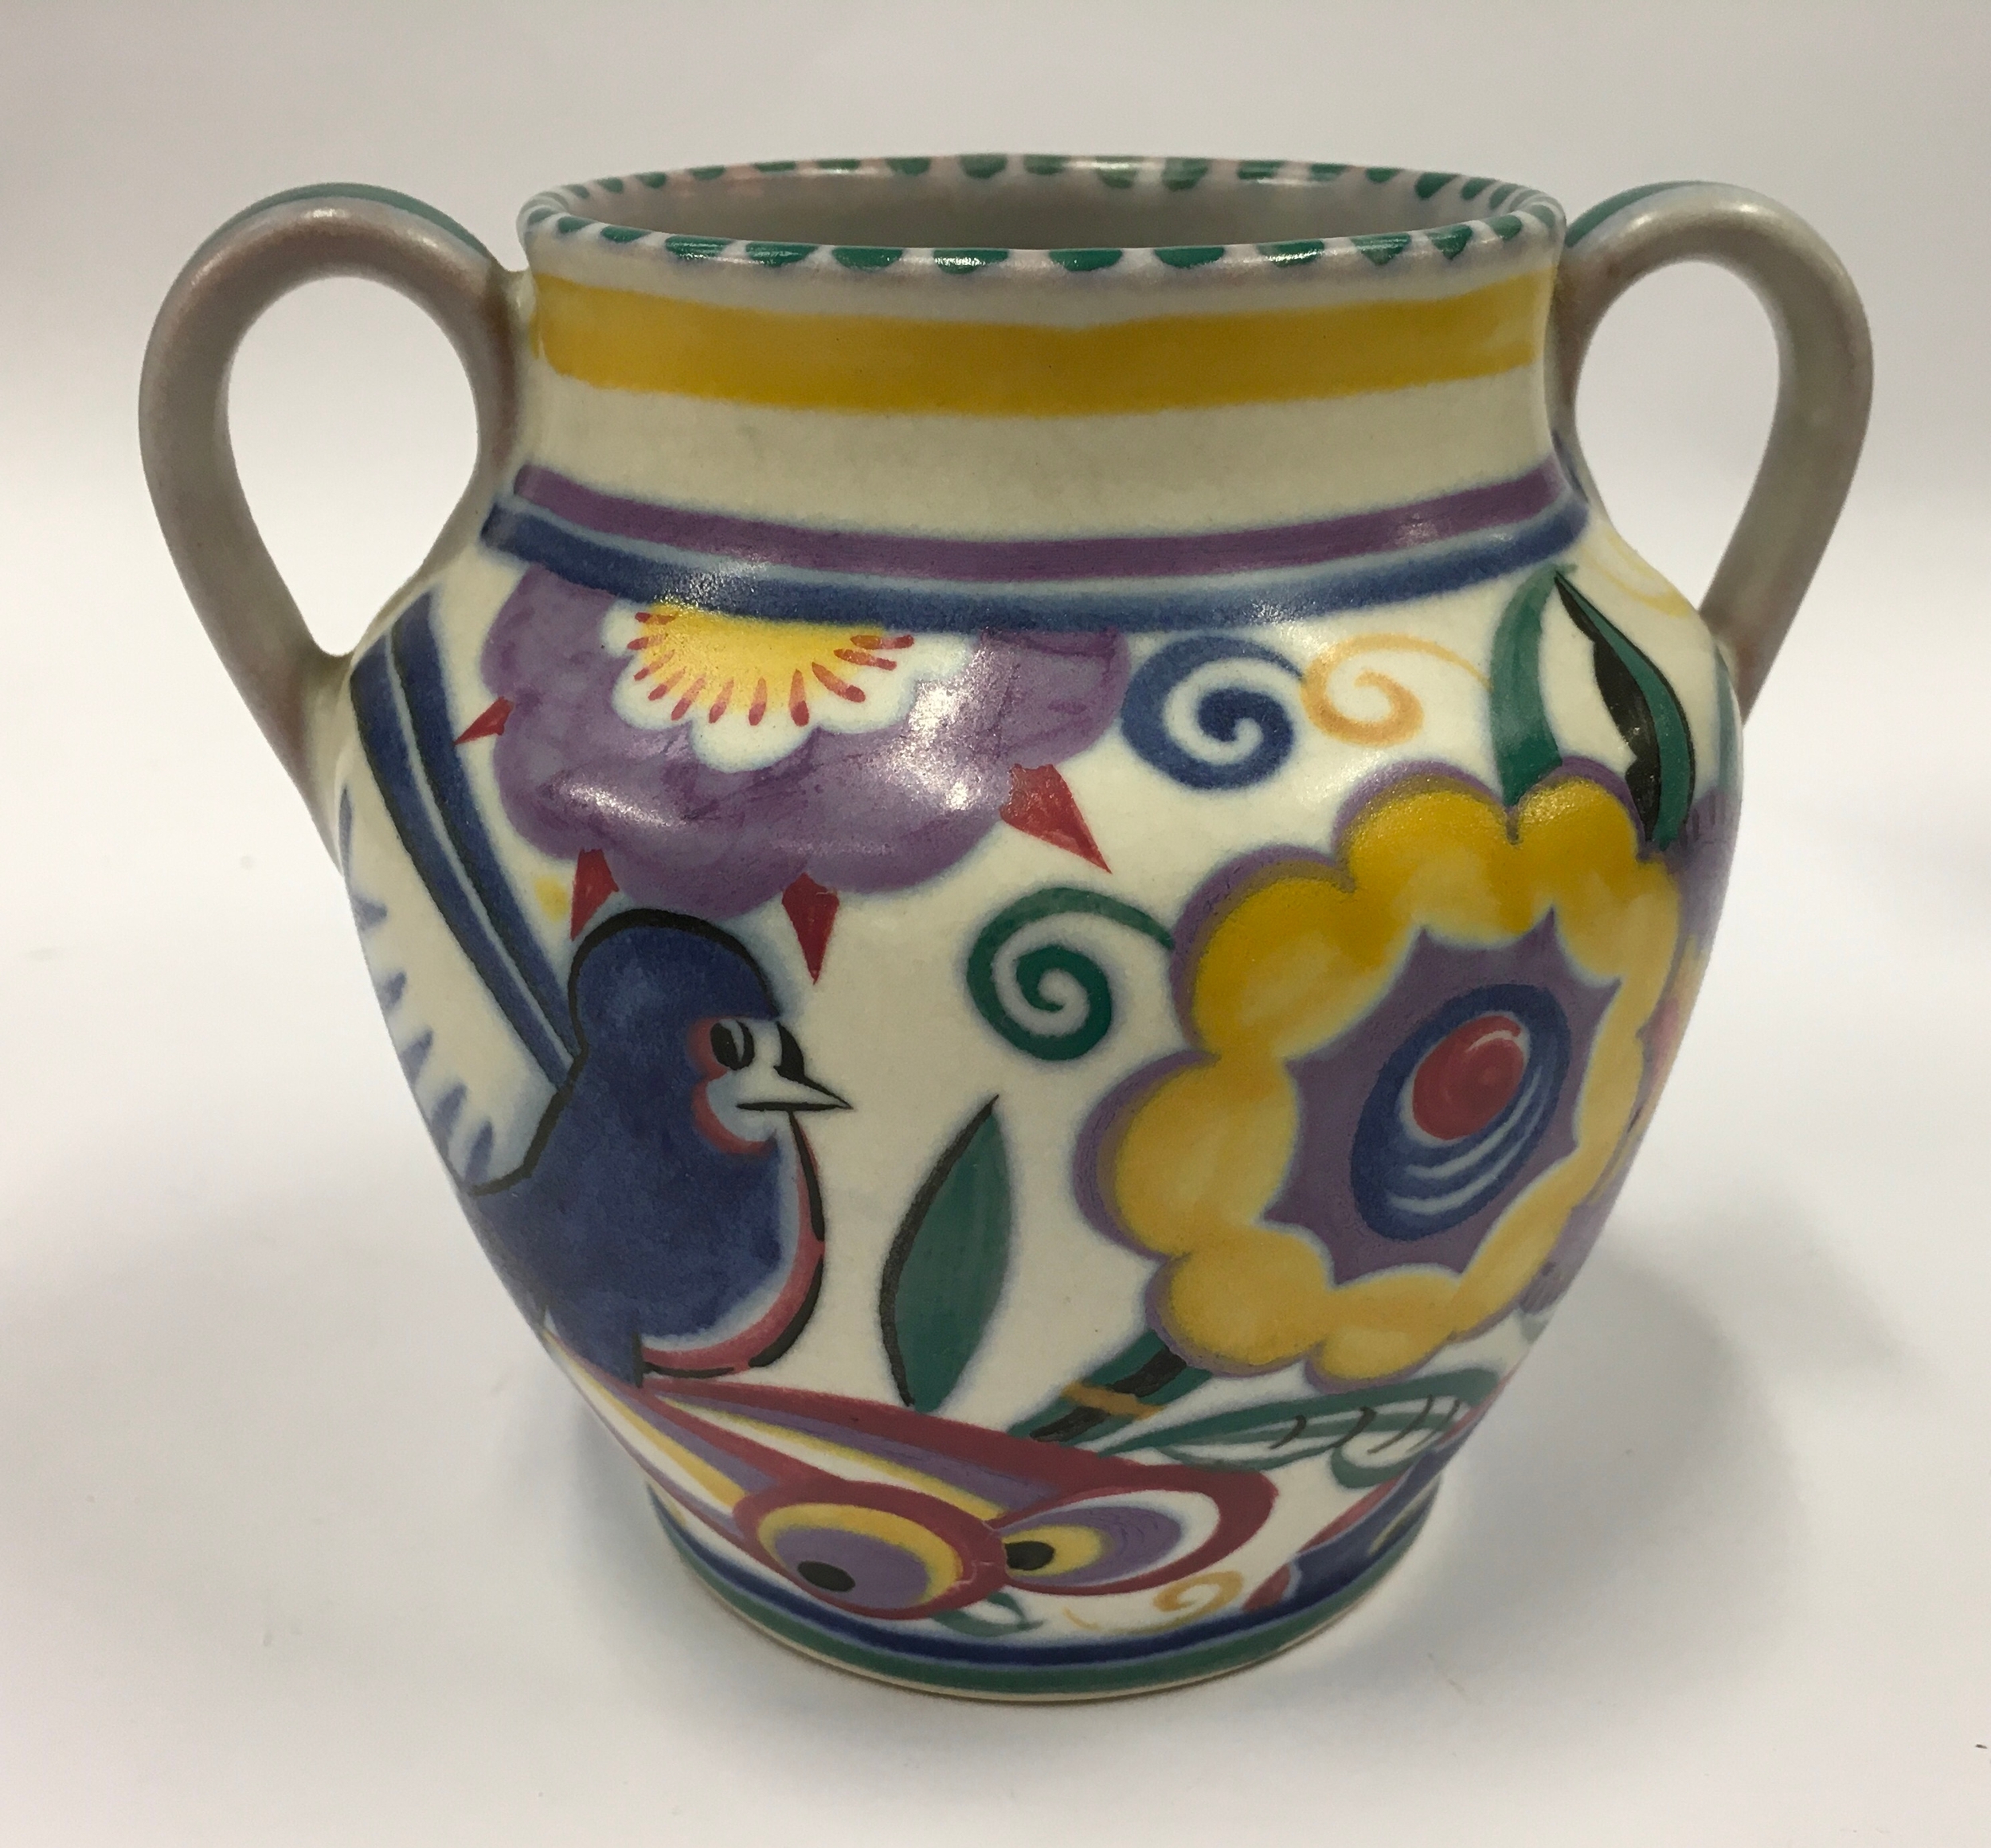 Poole Pottery shape 401 QB pattern (comical bird) twin handled vase 4.9"" high.